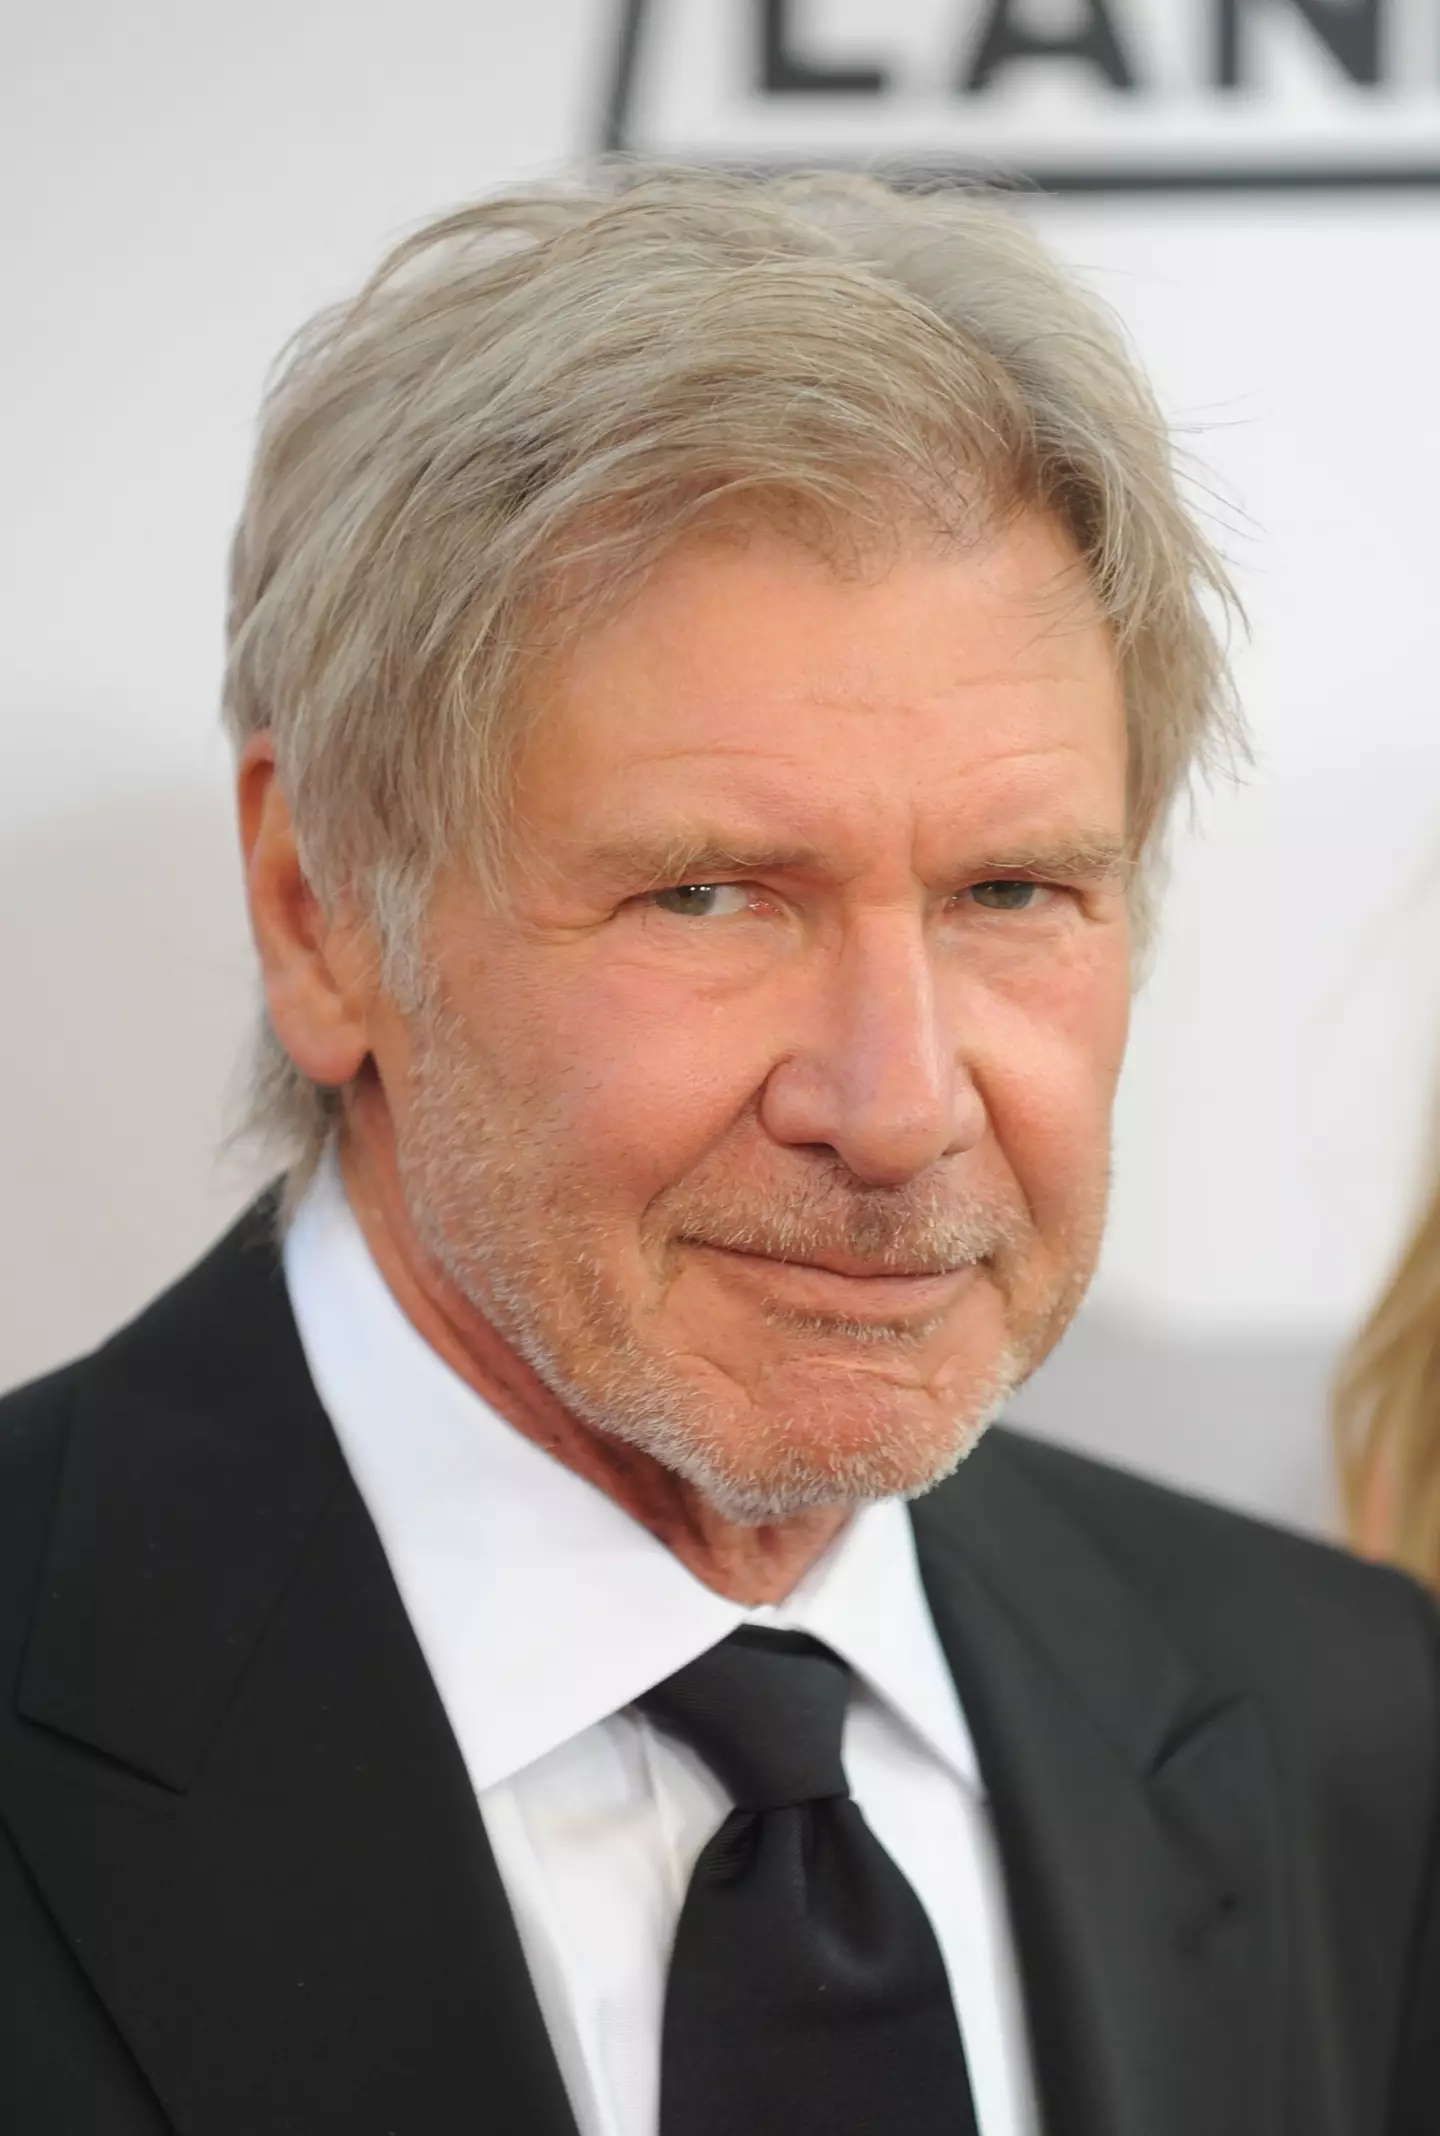 Harrison Ford has said it will be his last Indiana Jones film.